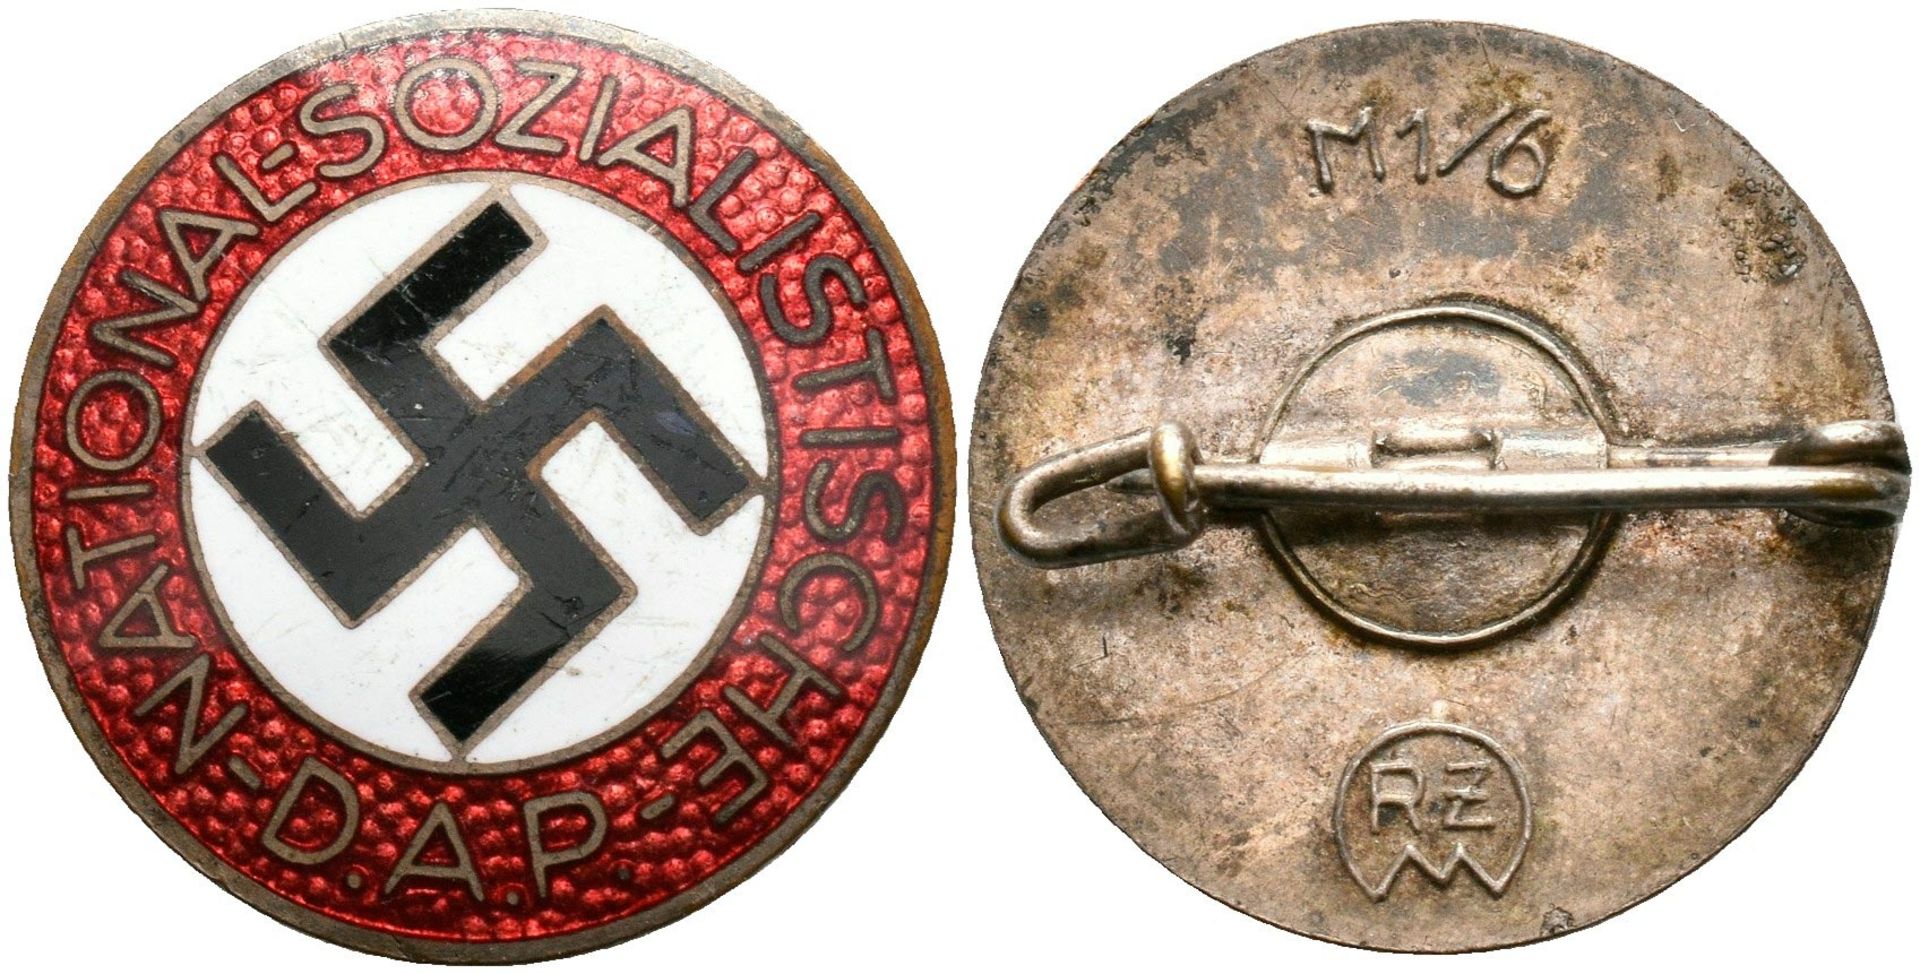 Nazi German worker party (NSDAP), member badges, 23 mm, enameled, reverse manufacturer \\M1 / 6\\